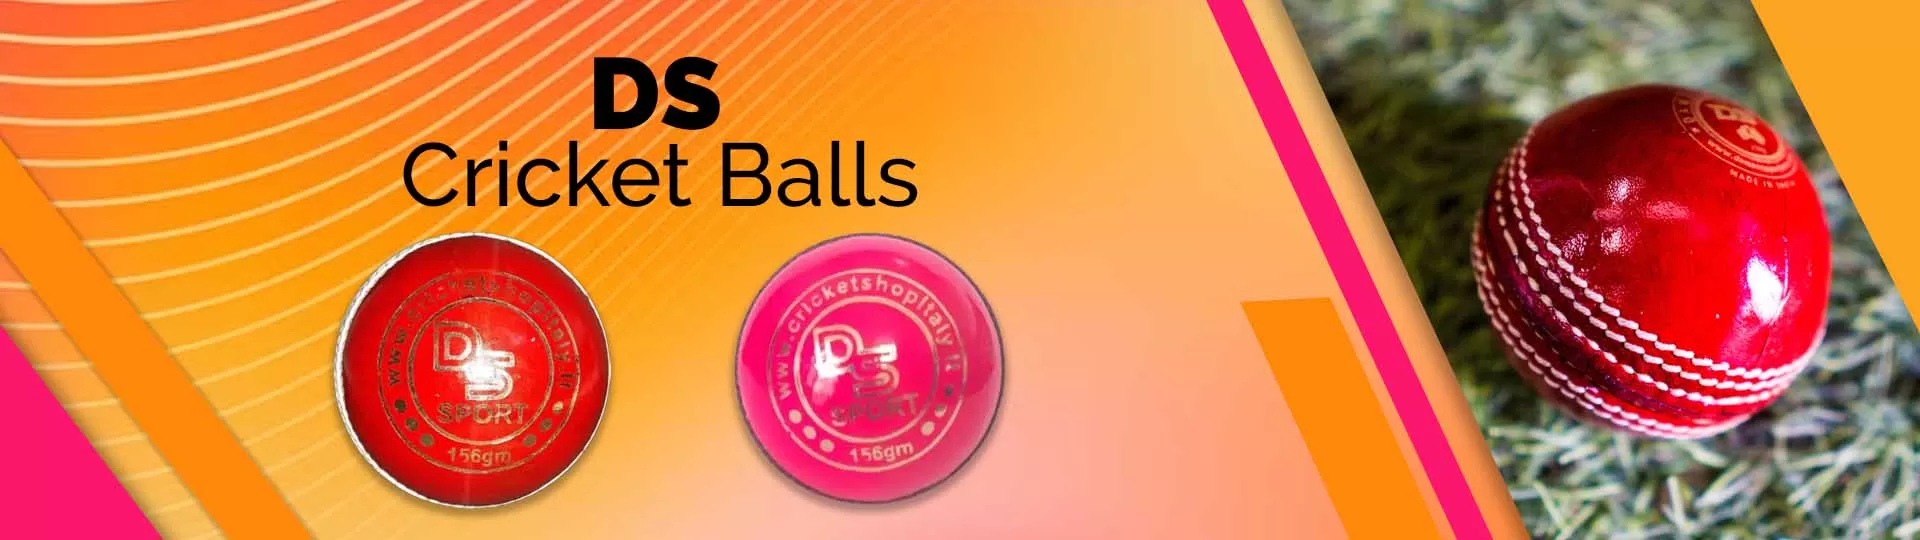 DS Cricket Balls